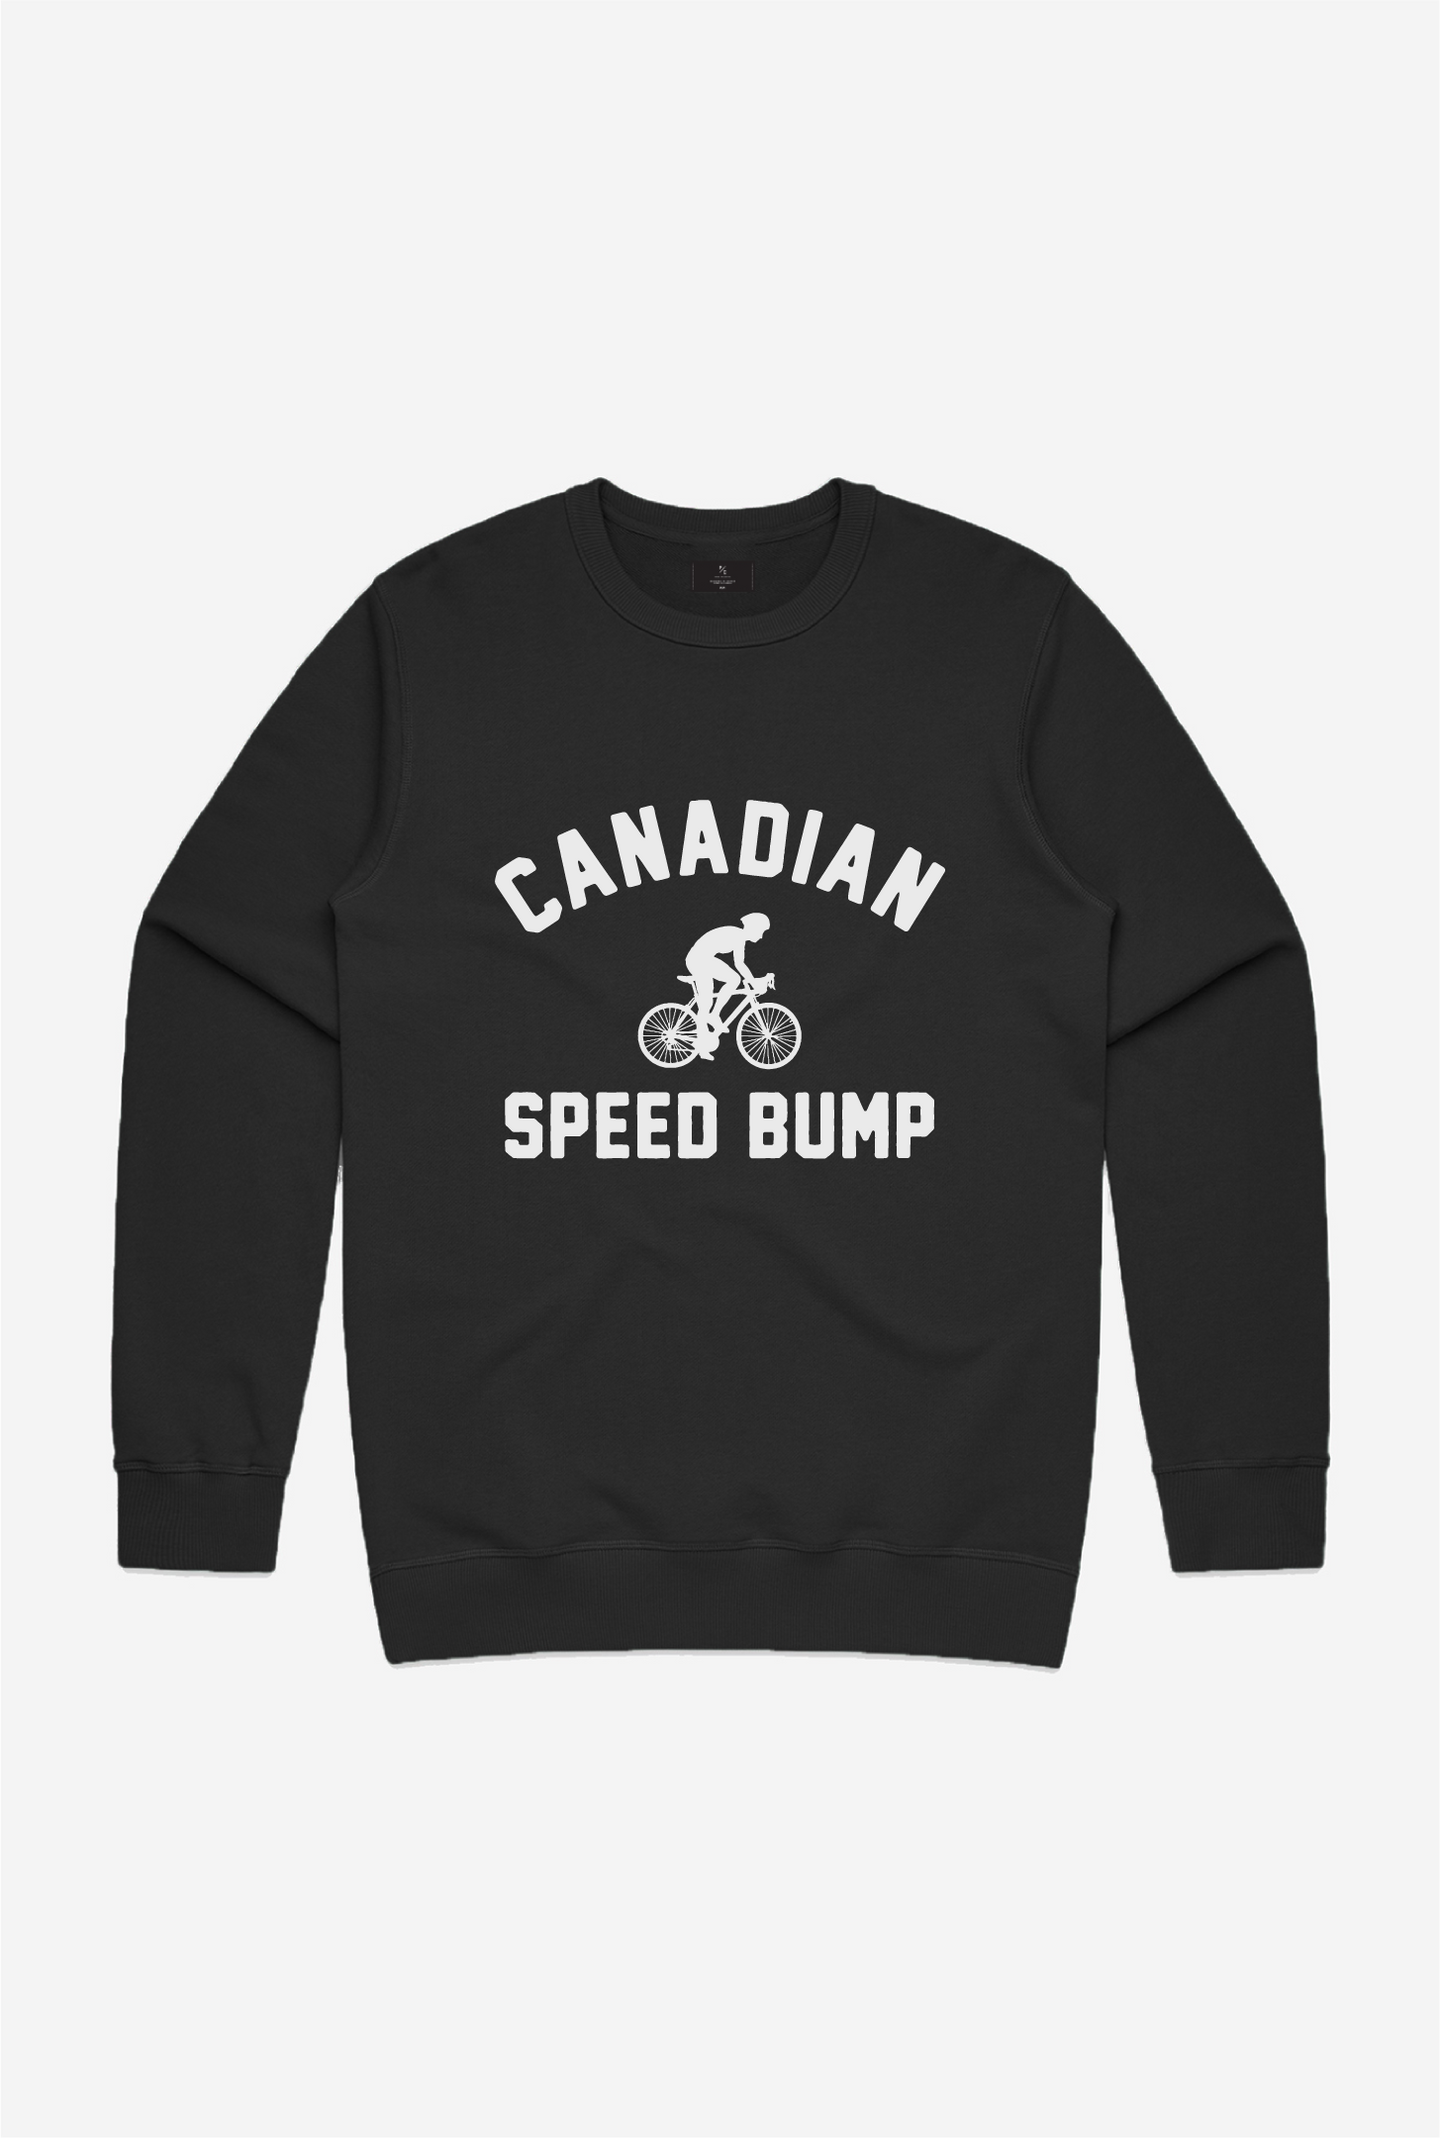 Canadian Speed Bump Crewneck - Black